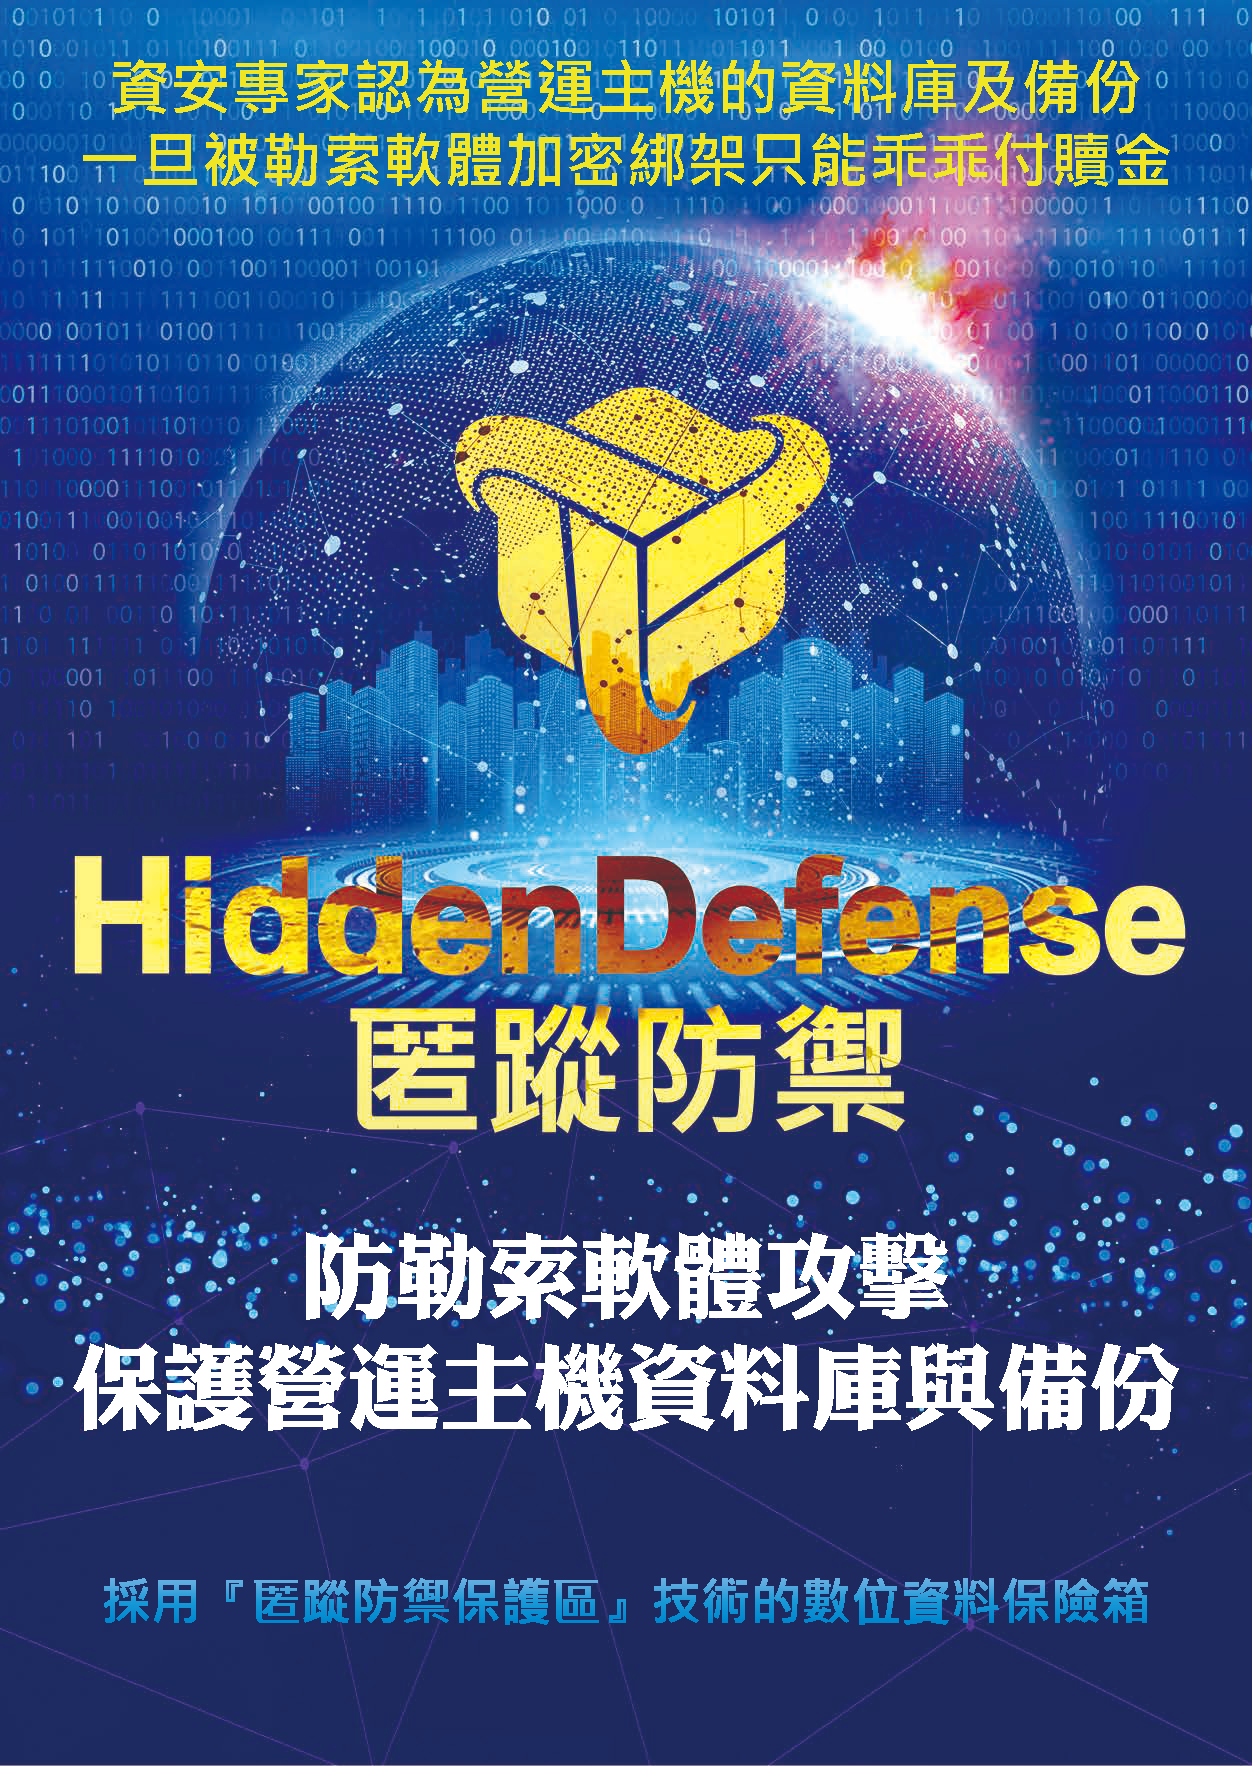 Hidden Defense 採用「匿蹤防禦保護區」技術的數位資料保險箱